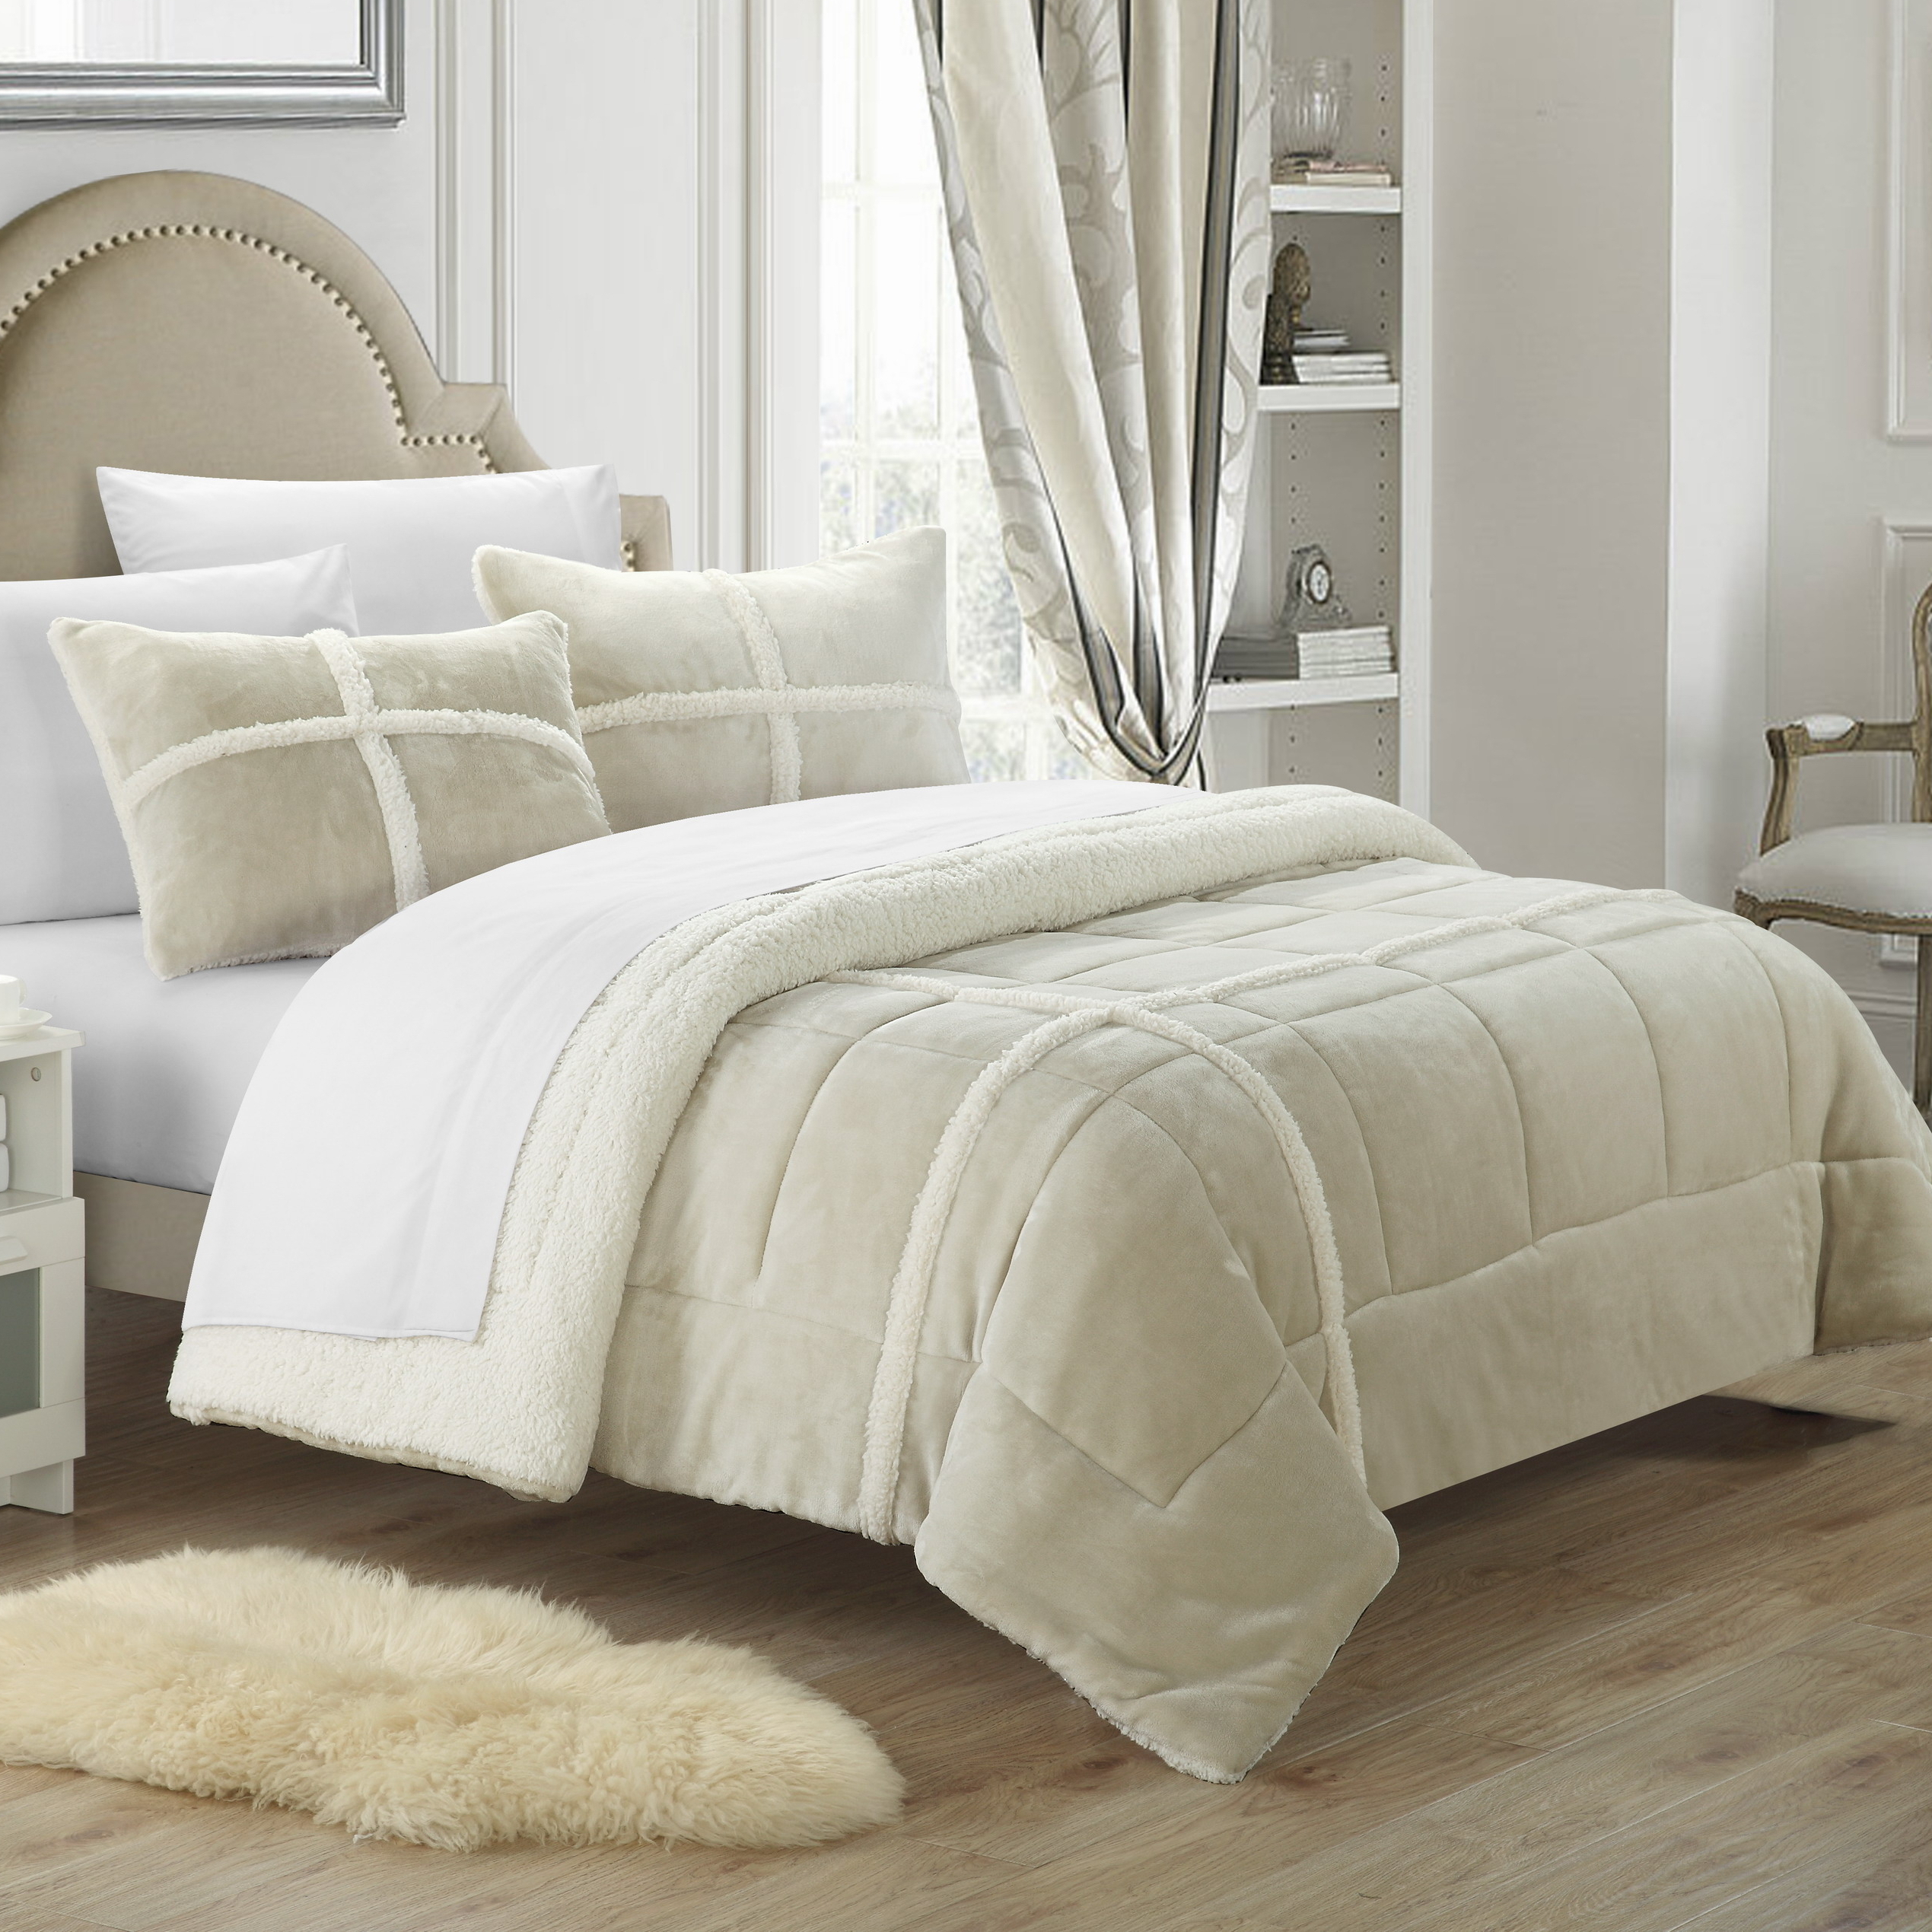 Chloe 3 Or 2 Piece Comforter Set Ultra Plush Micro Mink Sherpa Lined Bedding â Decorative Pillow Shams Included - Navy, King - 3 Piece